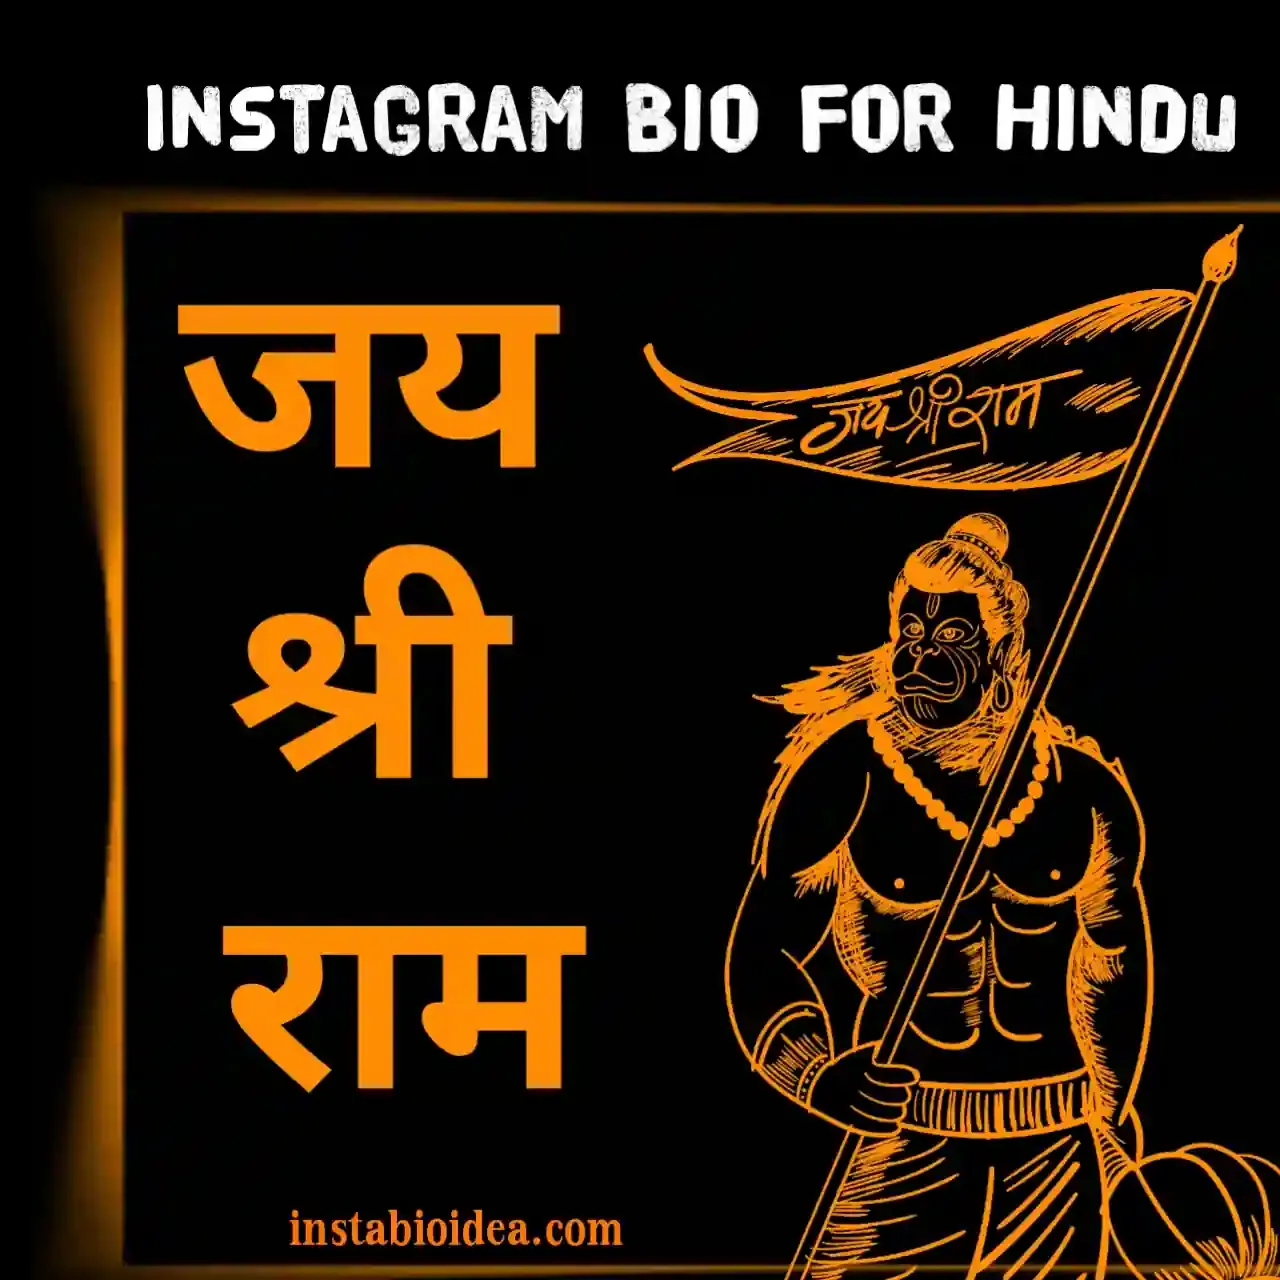 hindu bio for instagram image